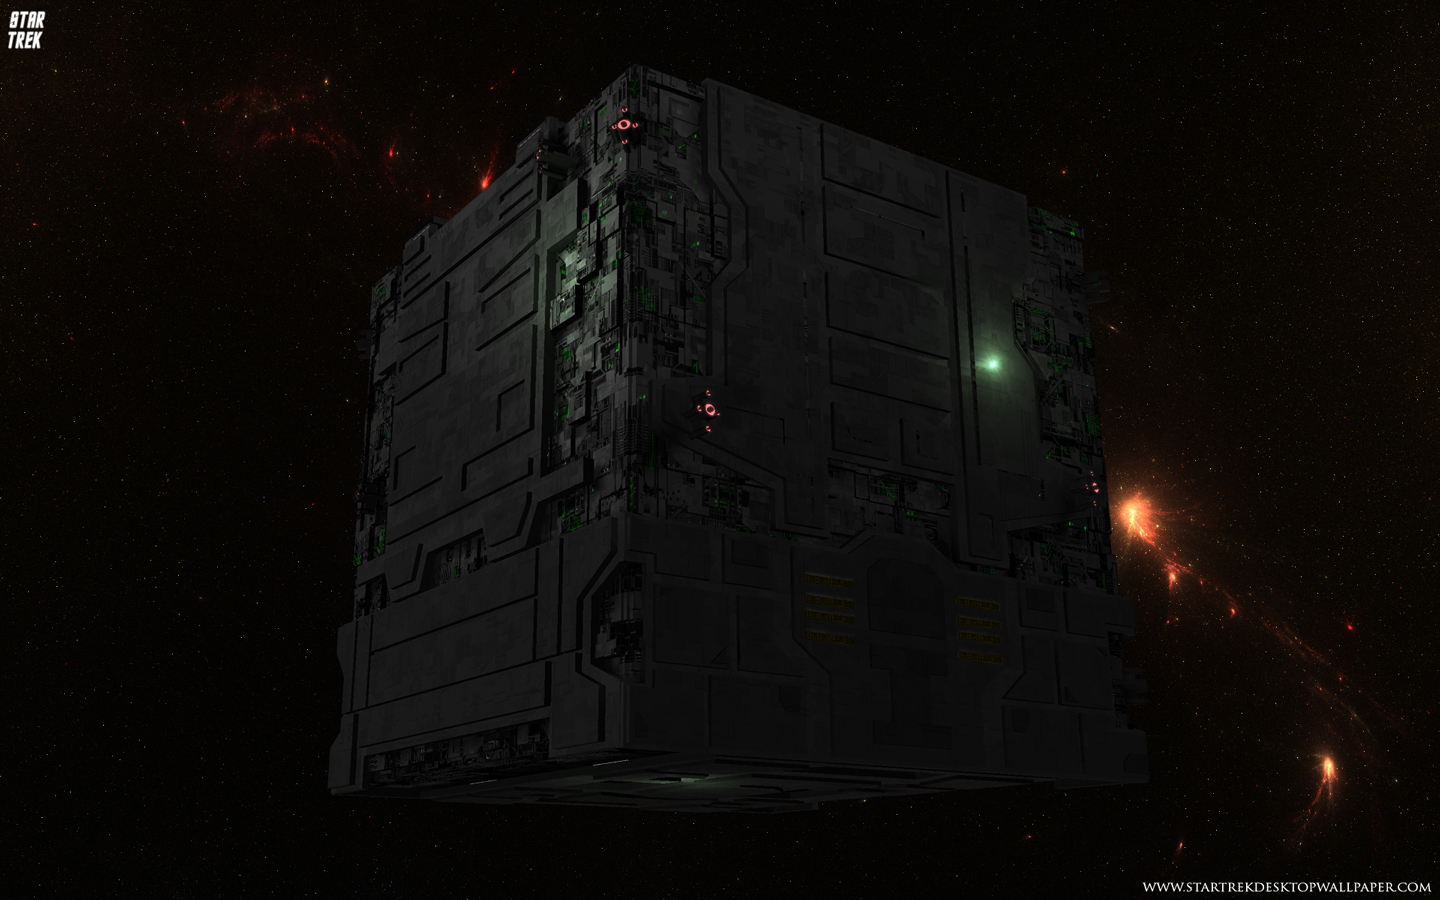 Trek Borg Tactical Cube Star Puter Desktop Wallpaper